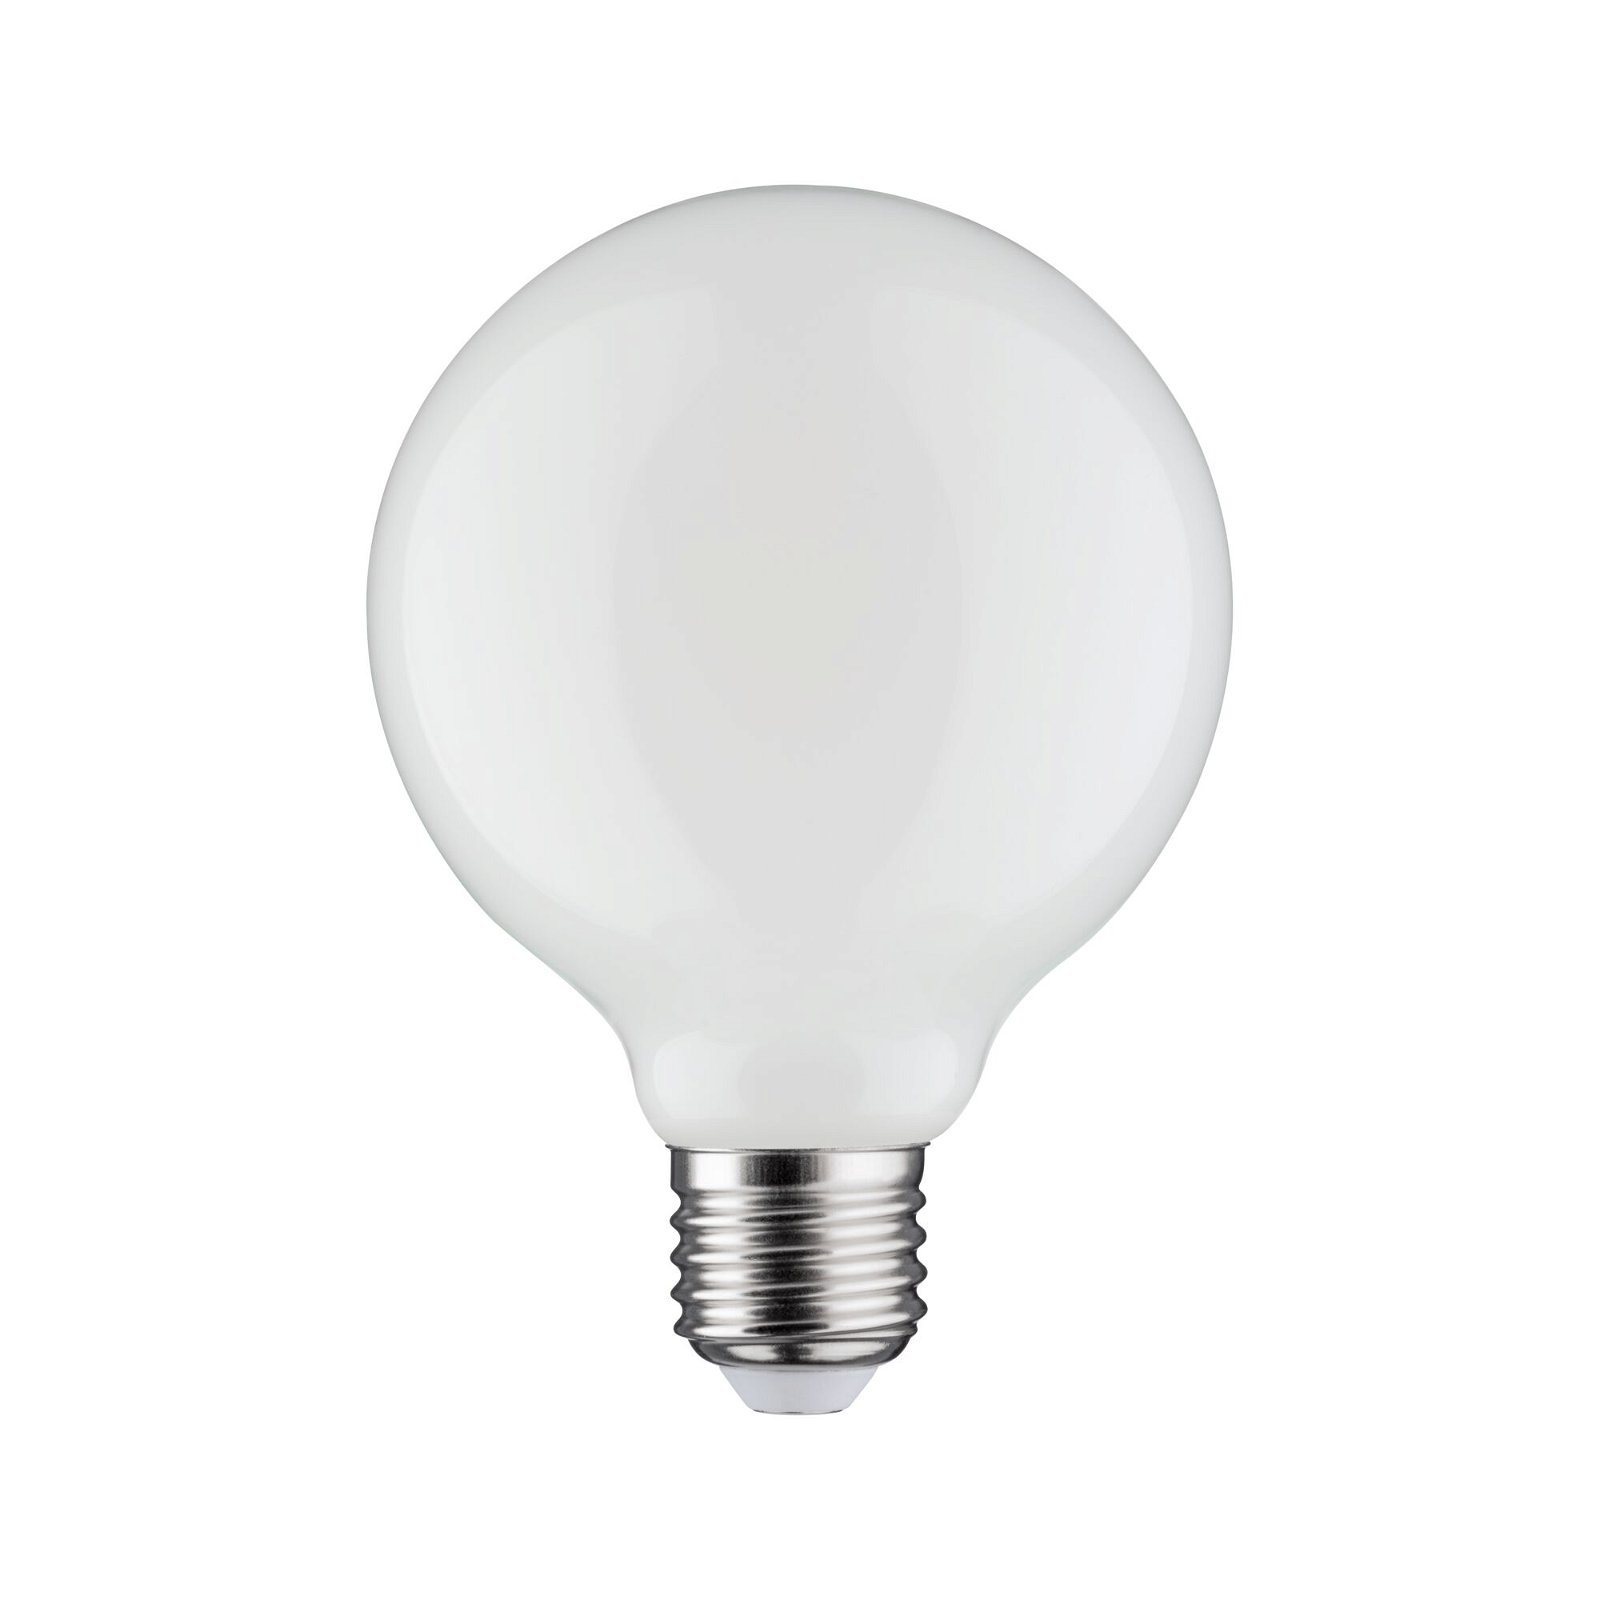 Startsets met prijsvoordeel Zigbee 3.0 Smart Home smik Gateway + Filament 230V LED-lamp E27 + Wandknop